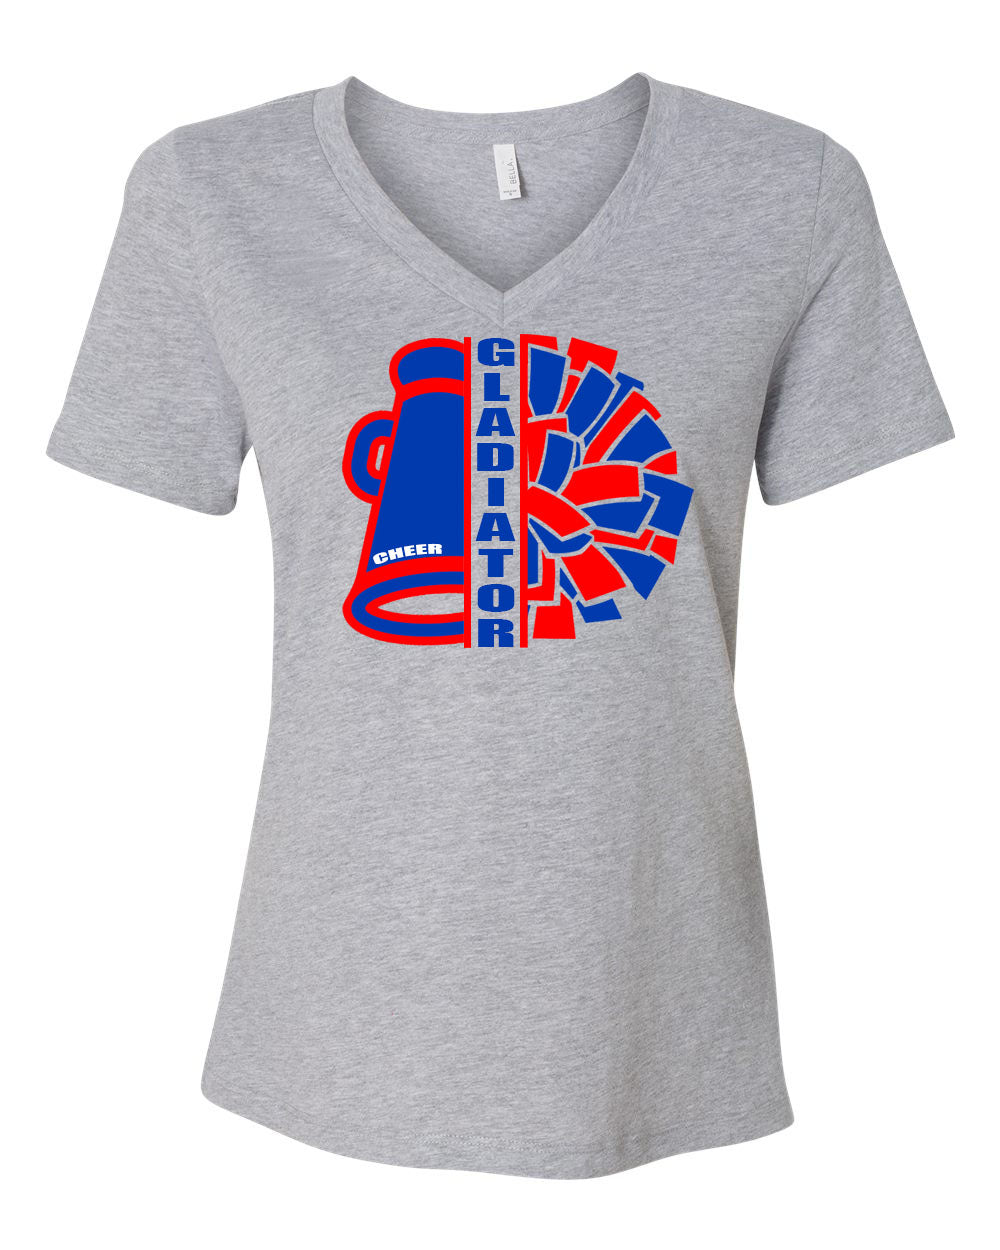 Goshen Cheer Design 10 V-neck T-shirt